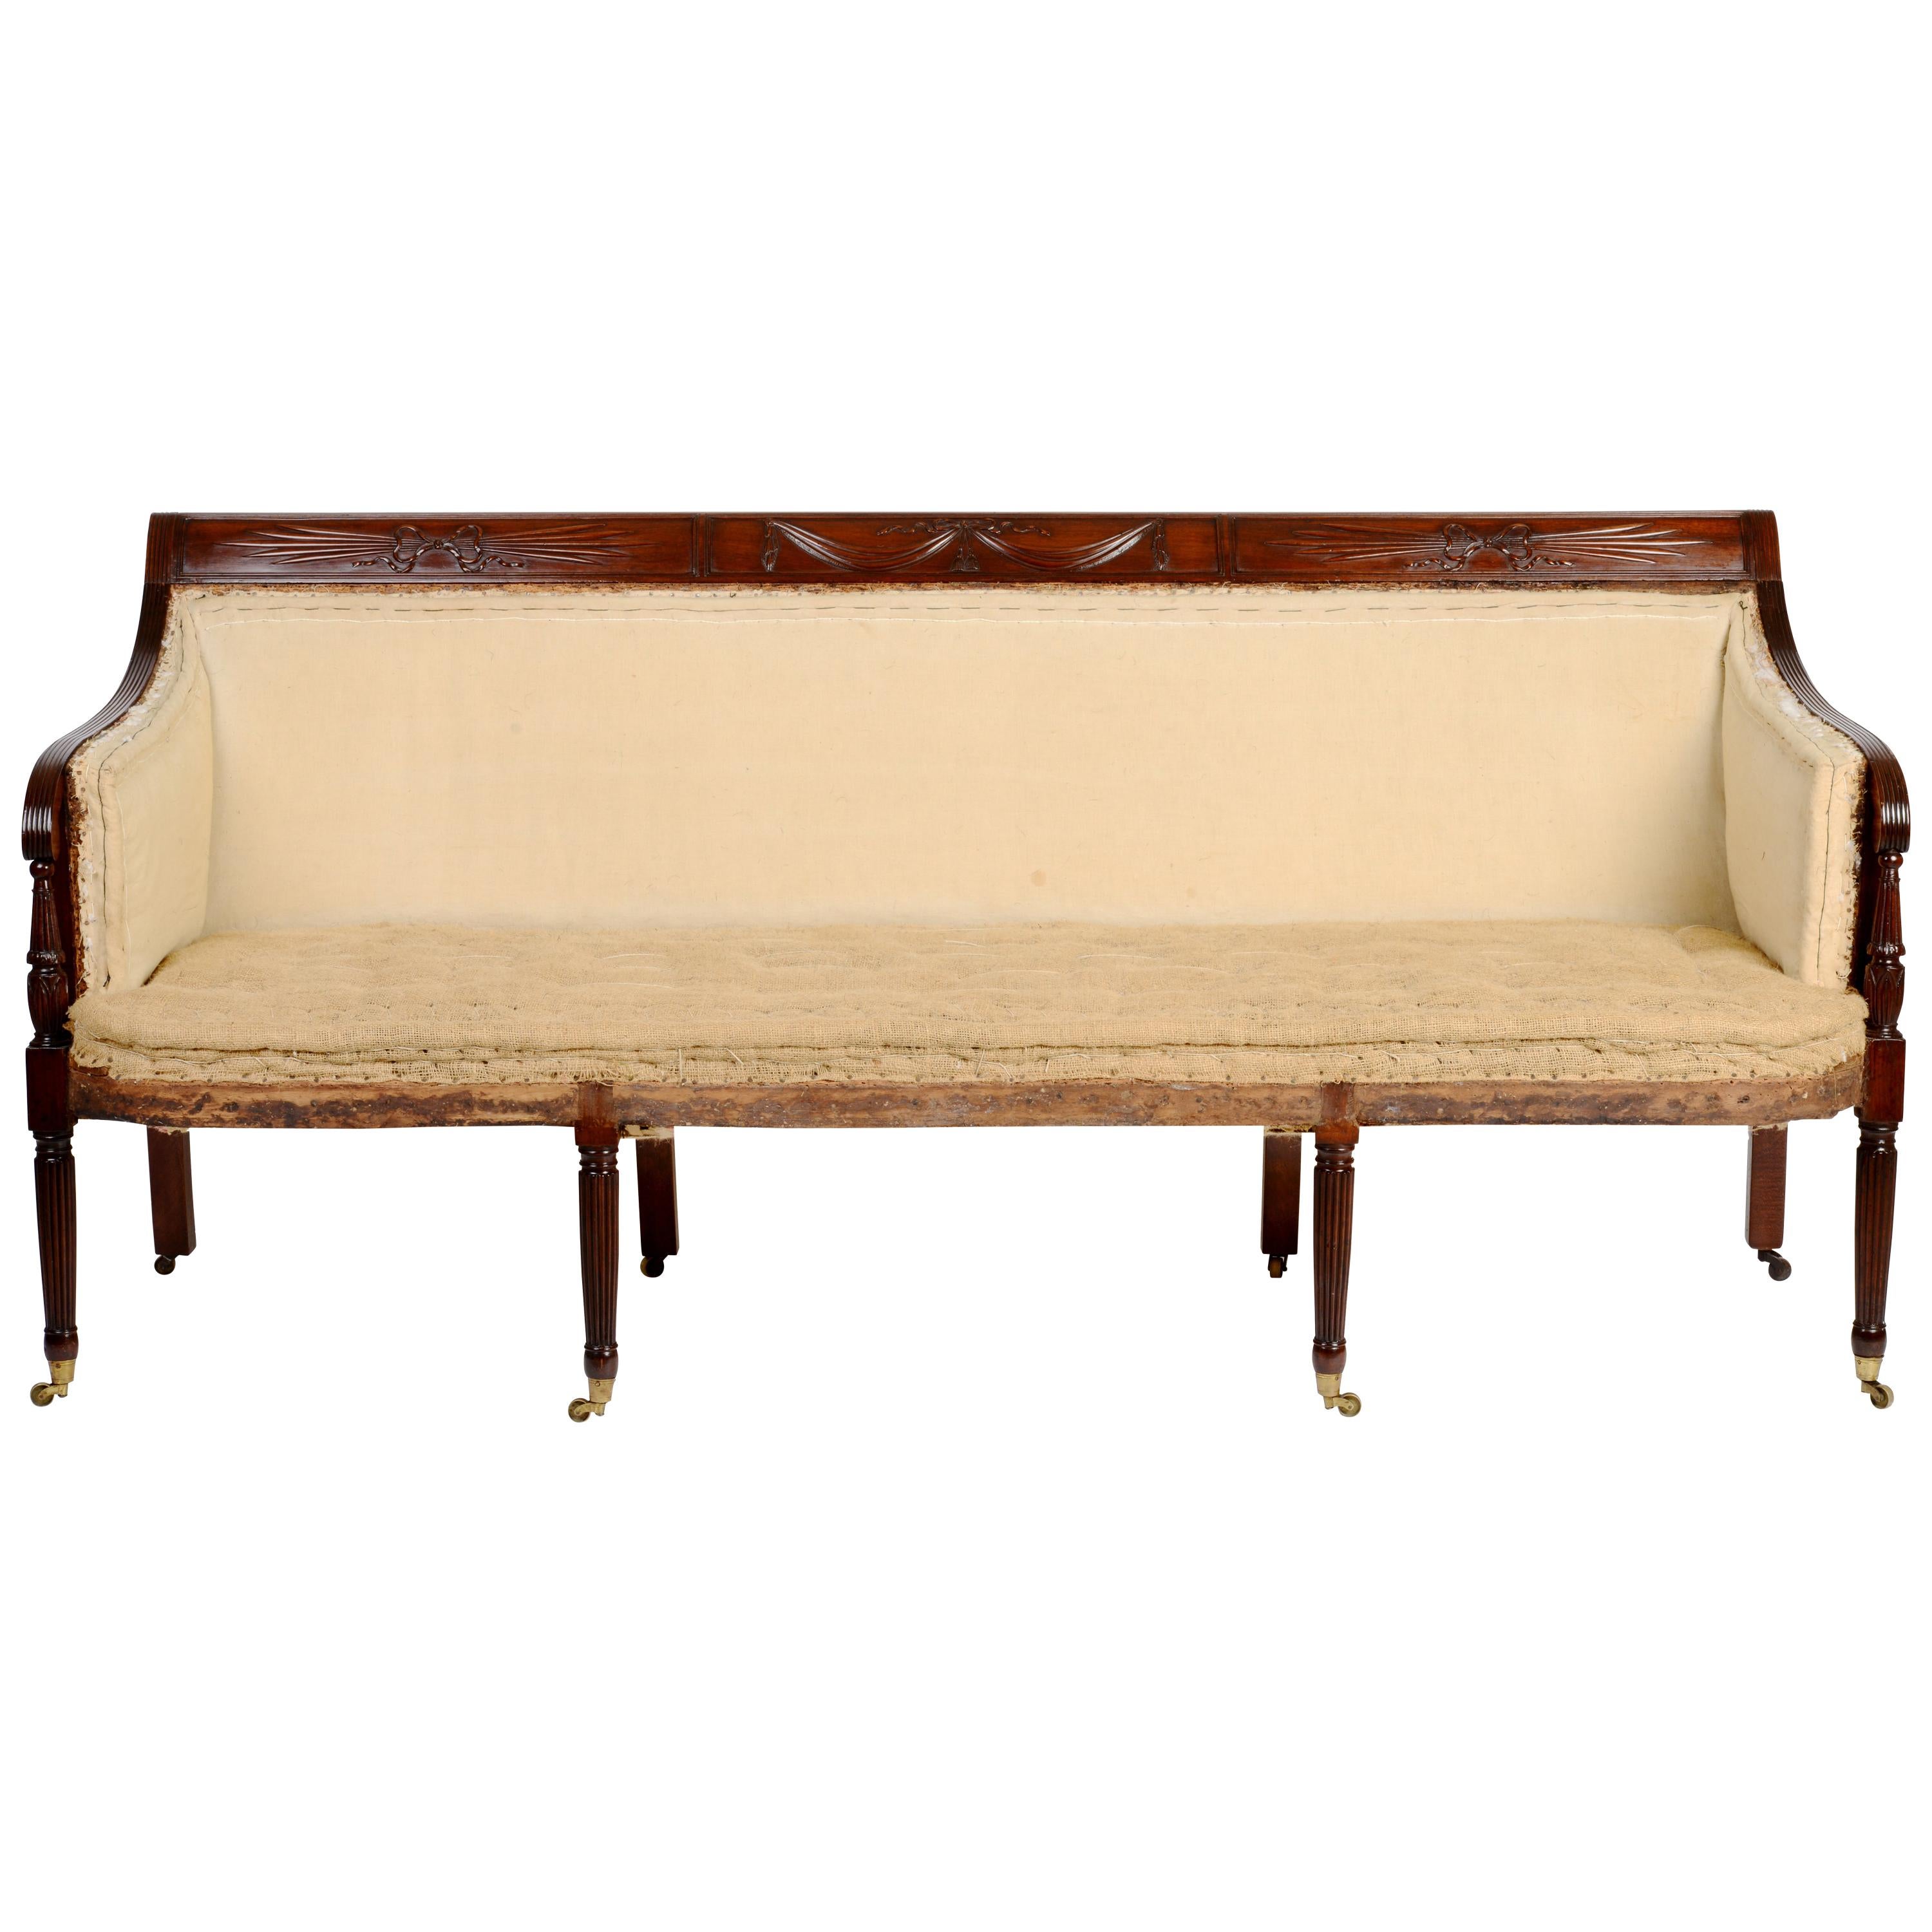 Federal Period Carved Mahogany Sofa Attributed to Duncan Phyfe NY, circa 1810